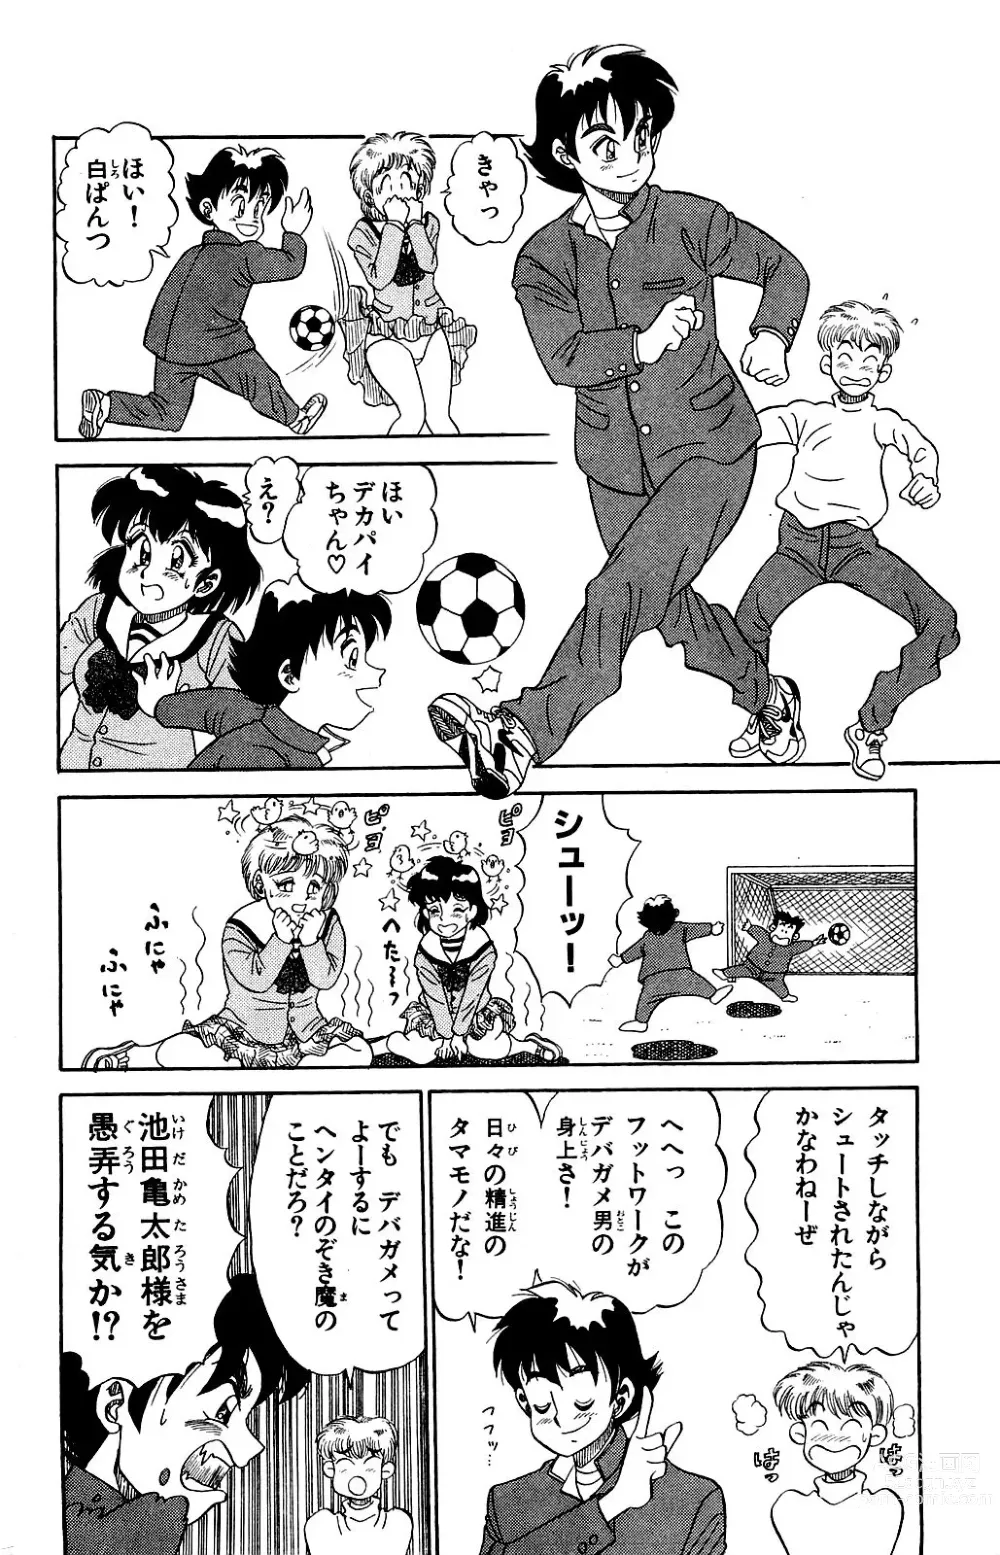 Page 14 of manga Orette Piyoritan Vol. 1